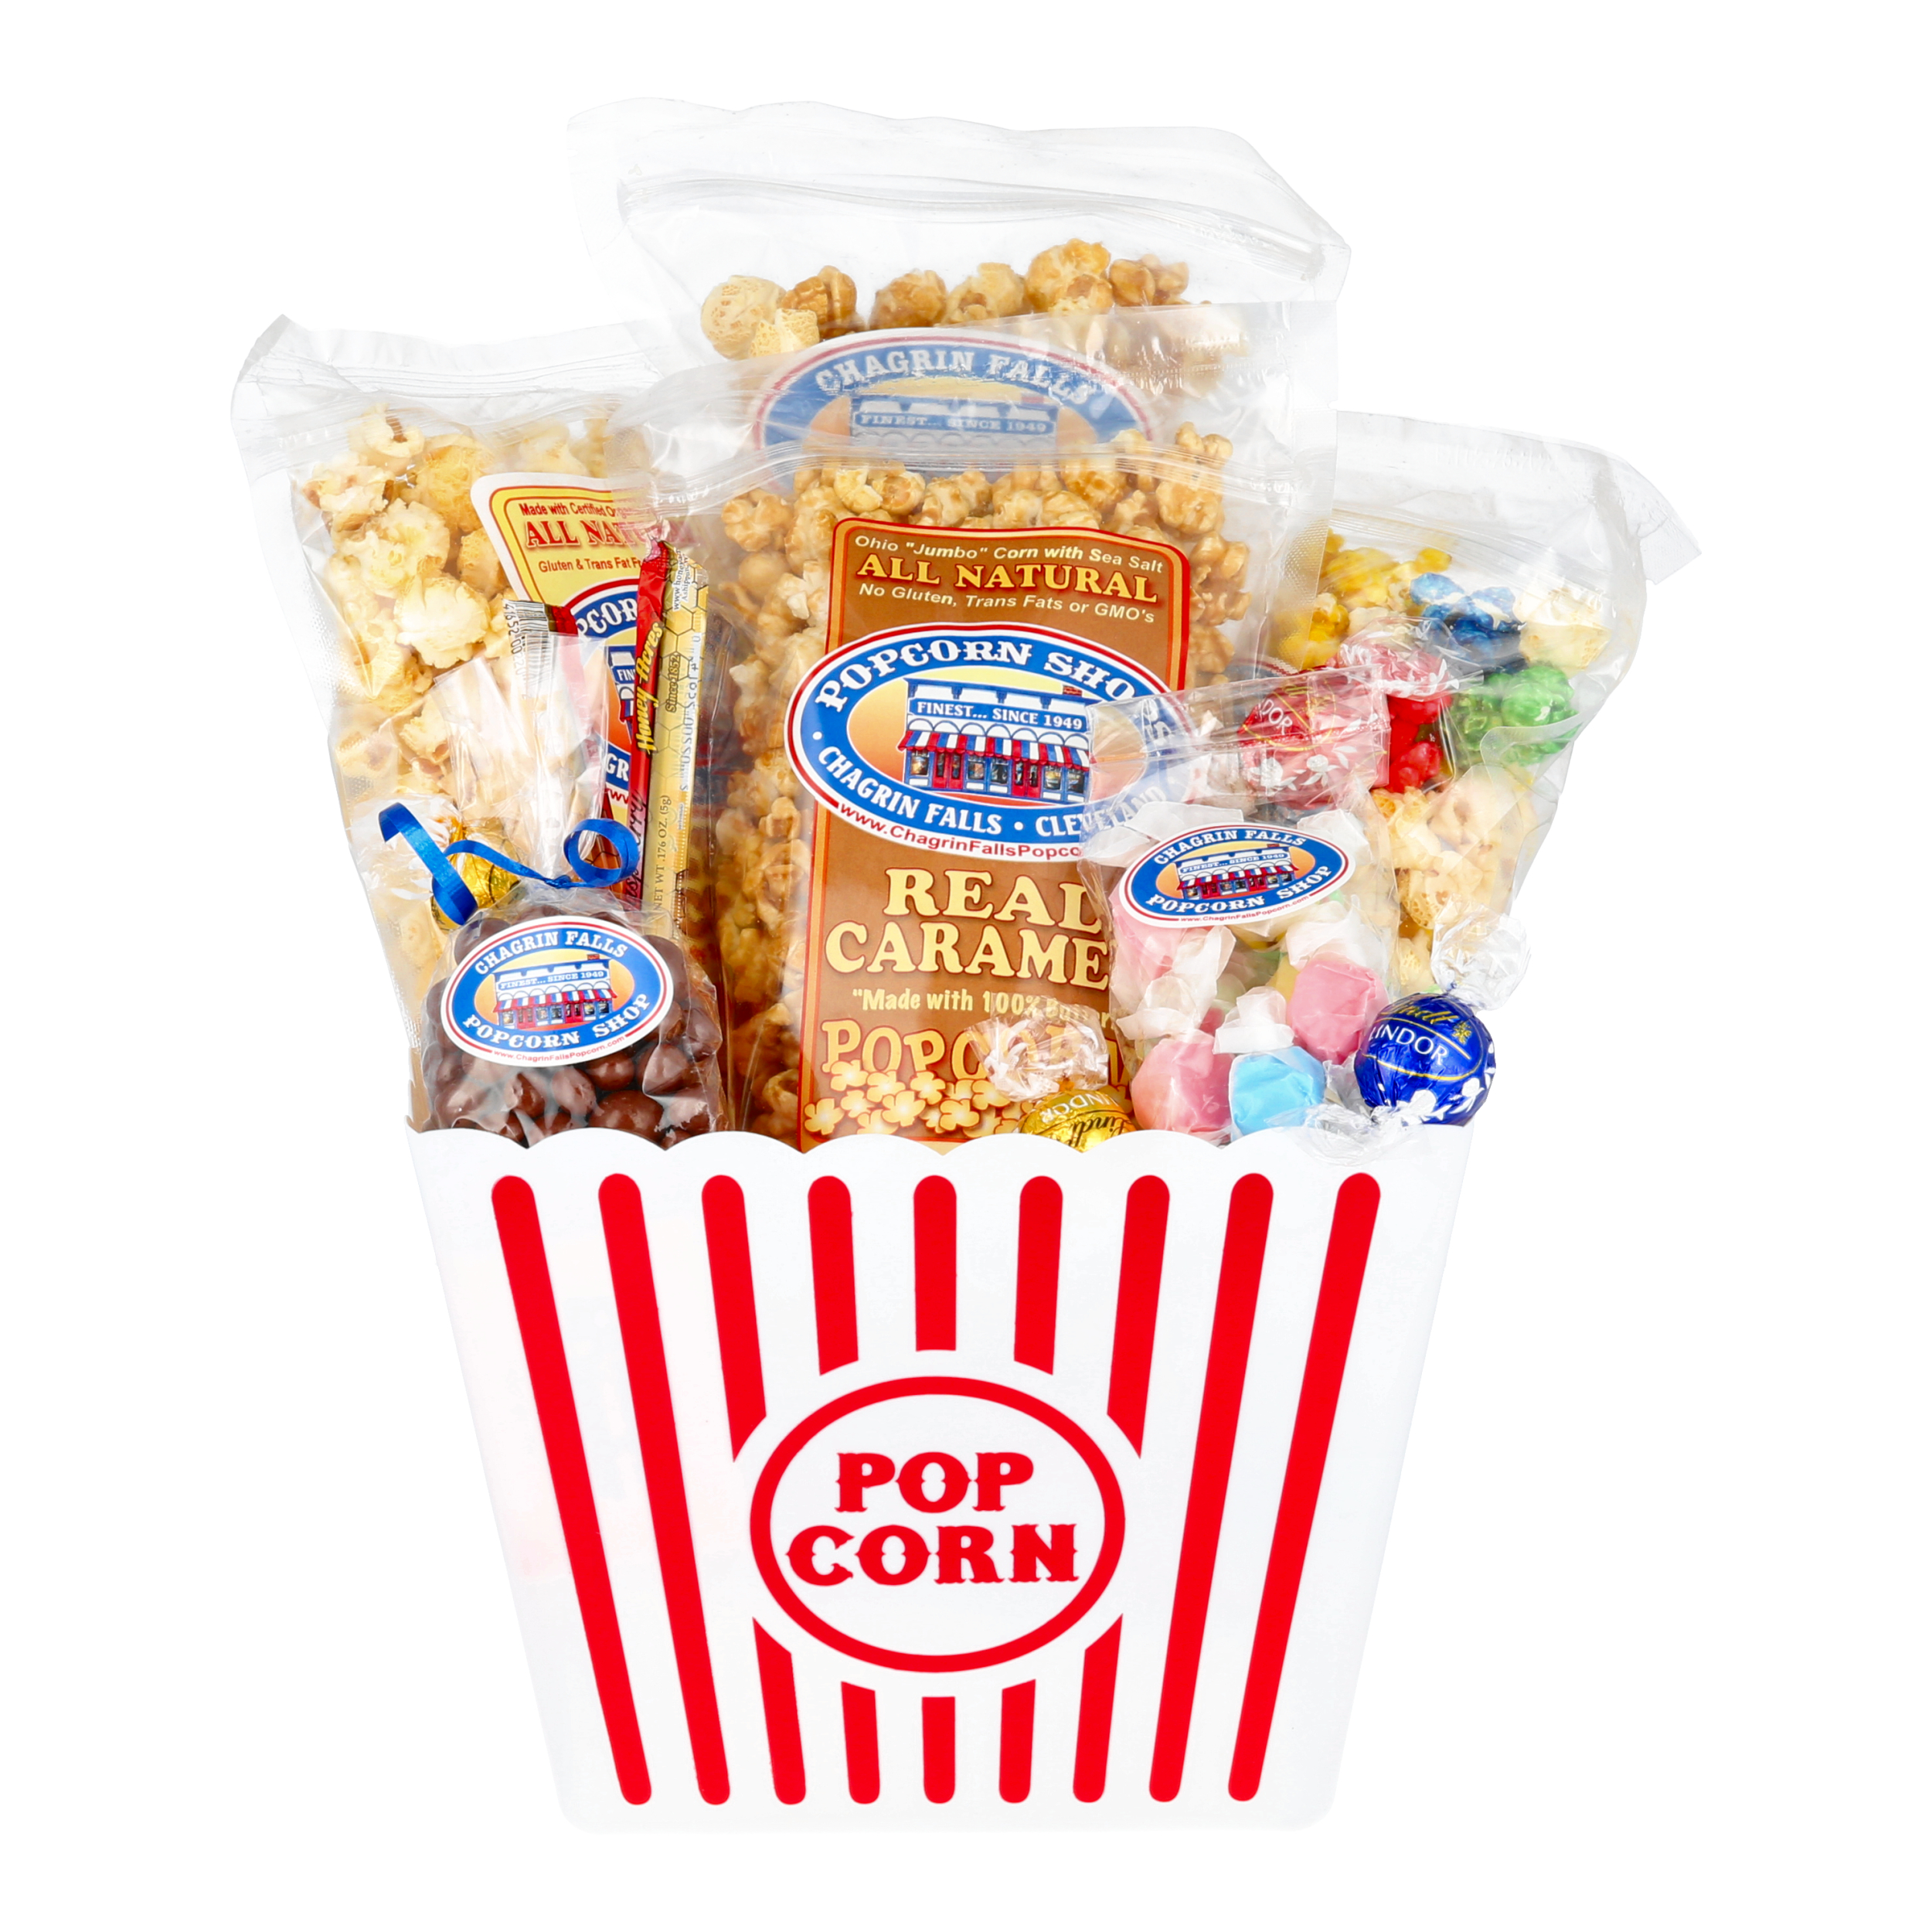 New* Popcorn Lover's Gift Box Set